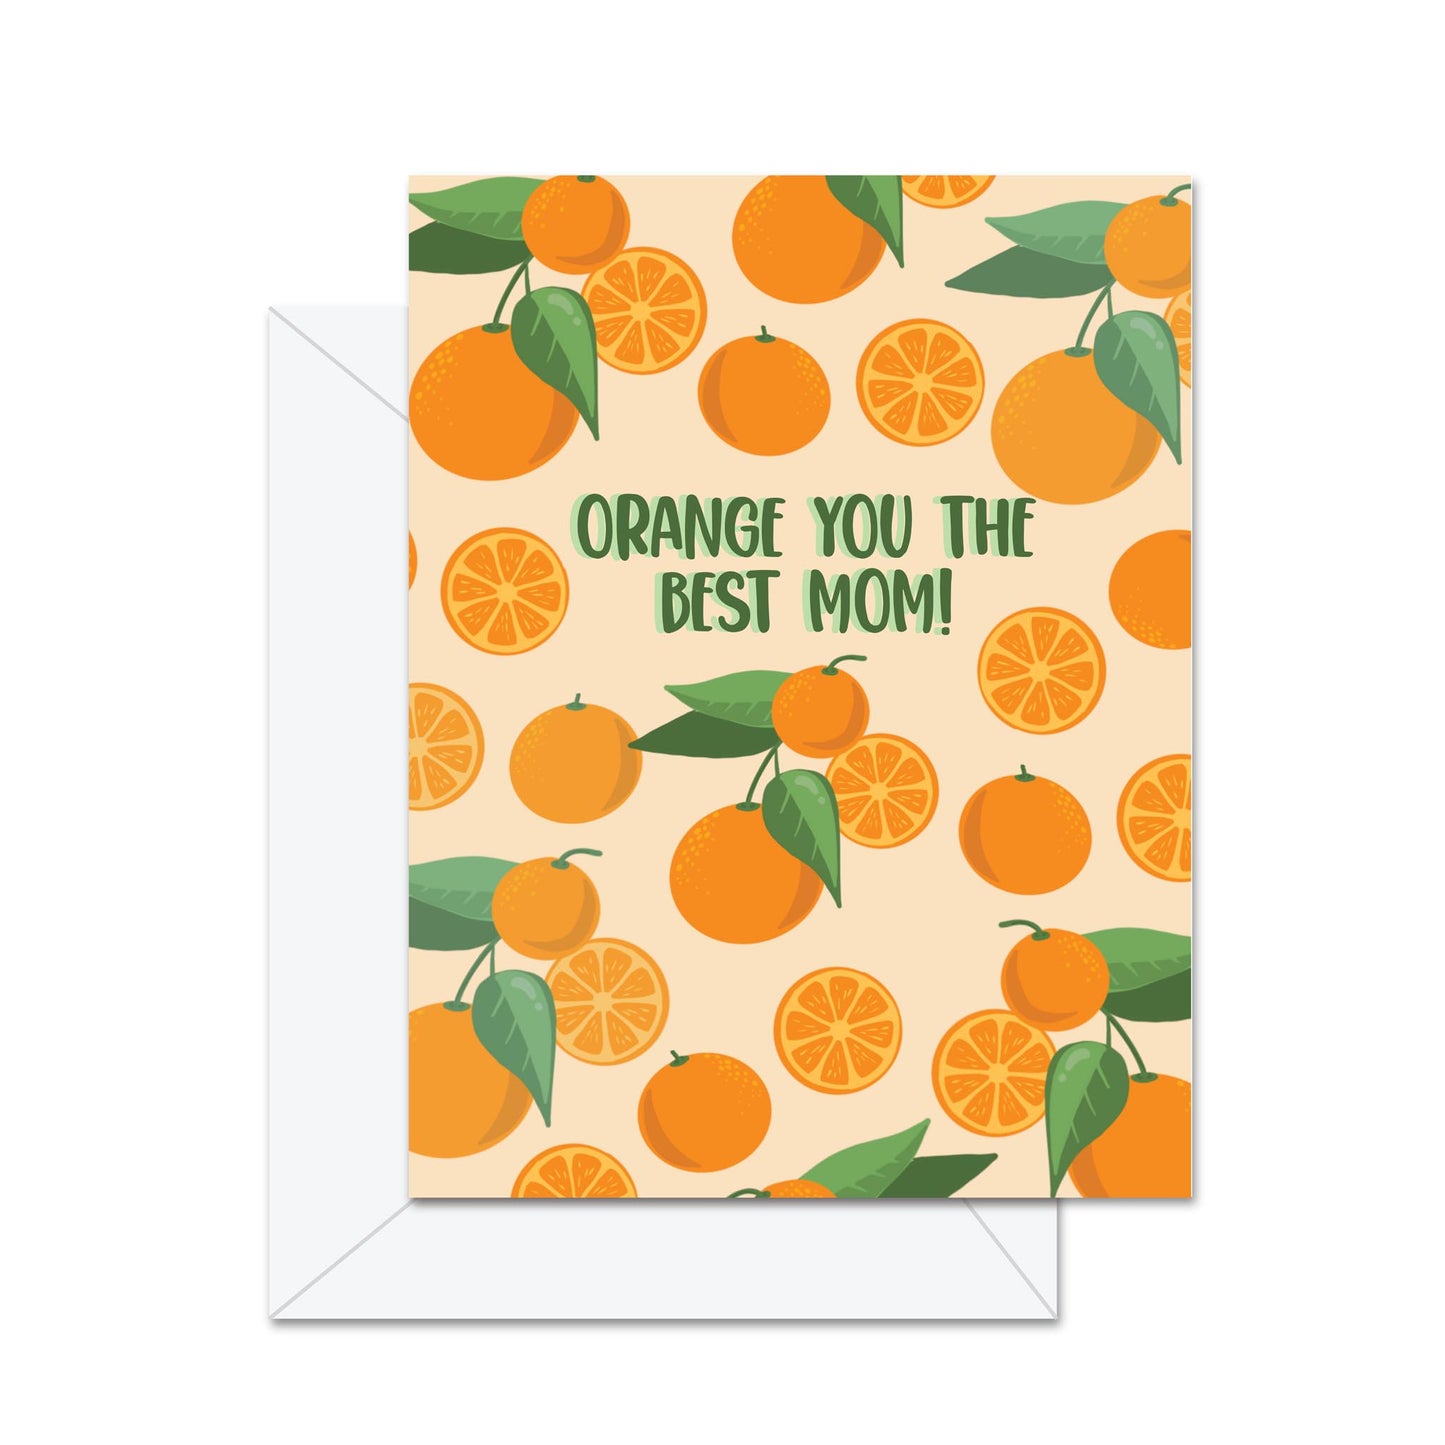 Orange You The Best Mom! - Greeting Card